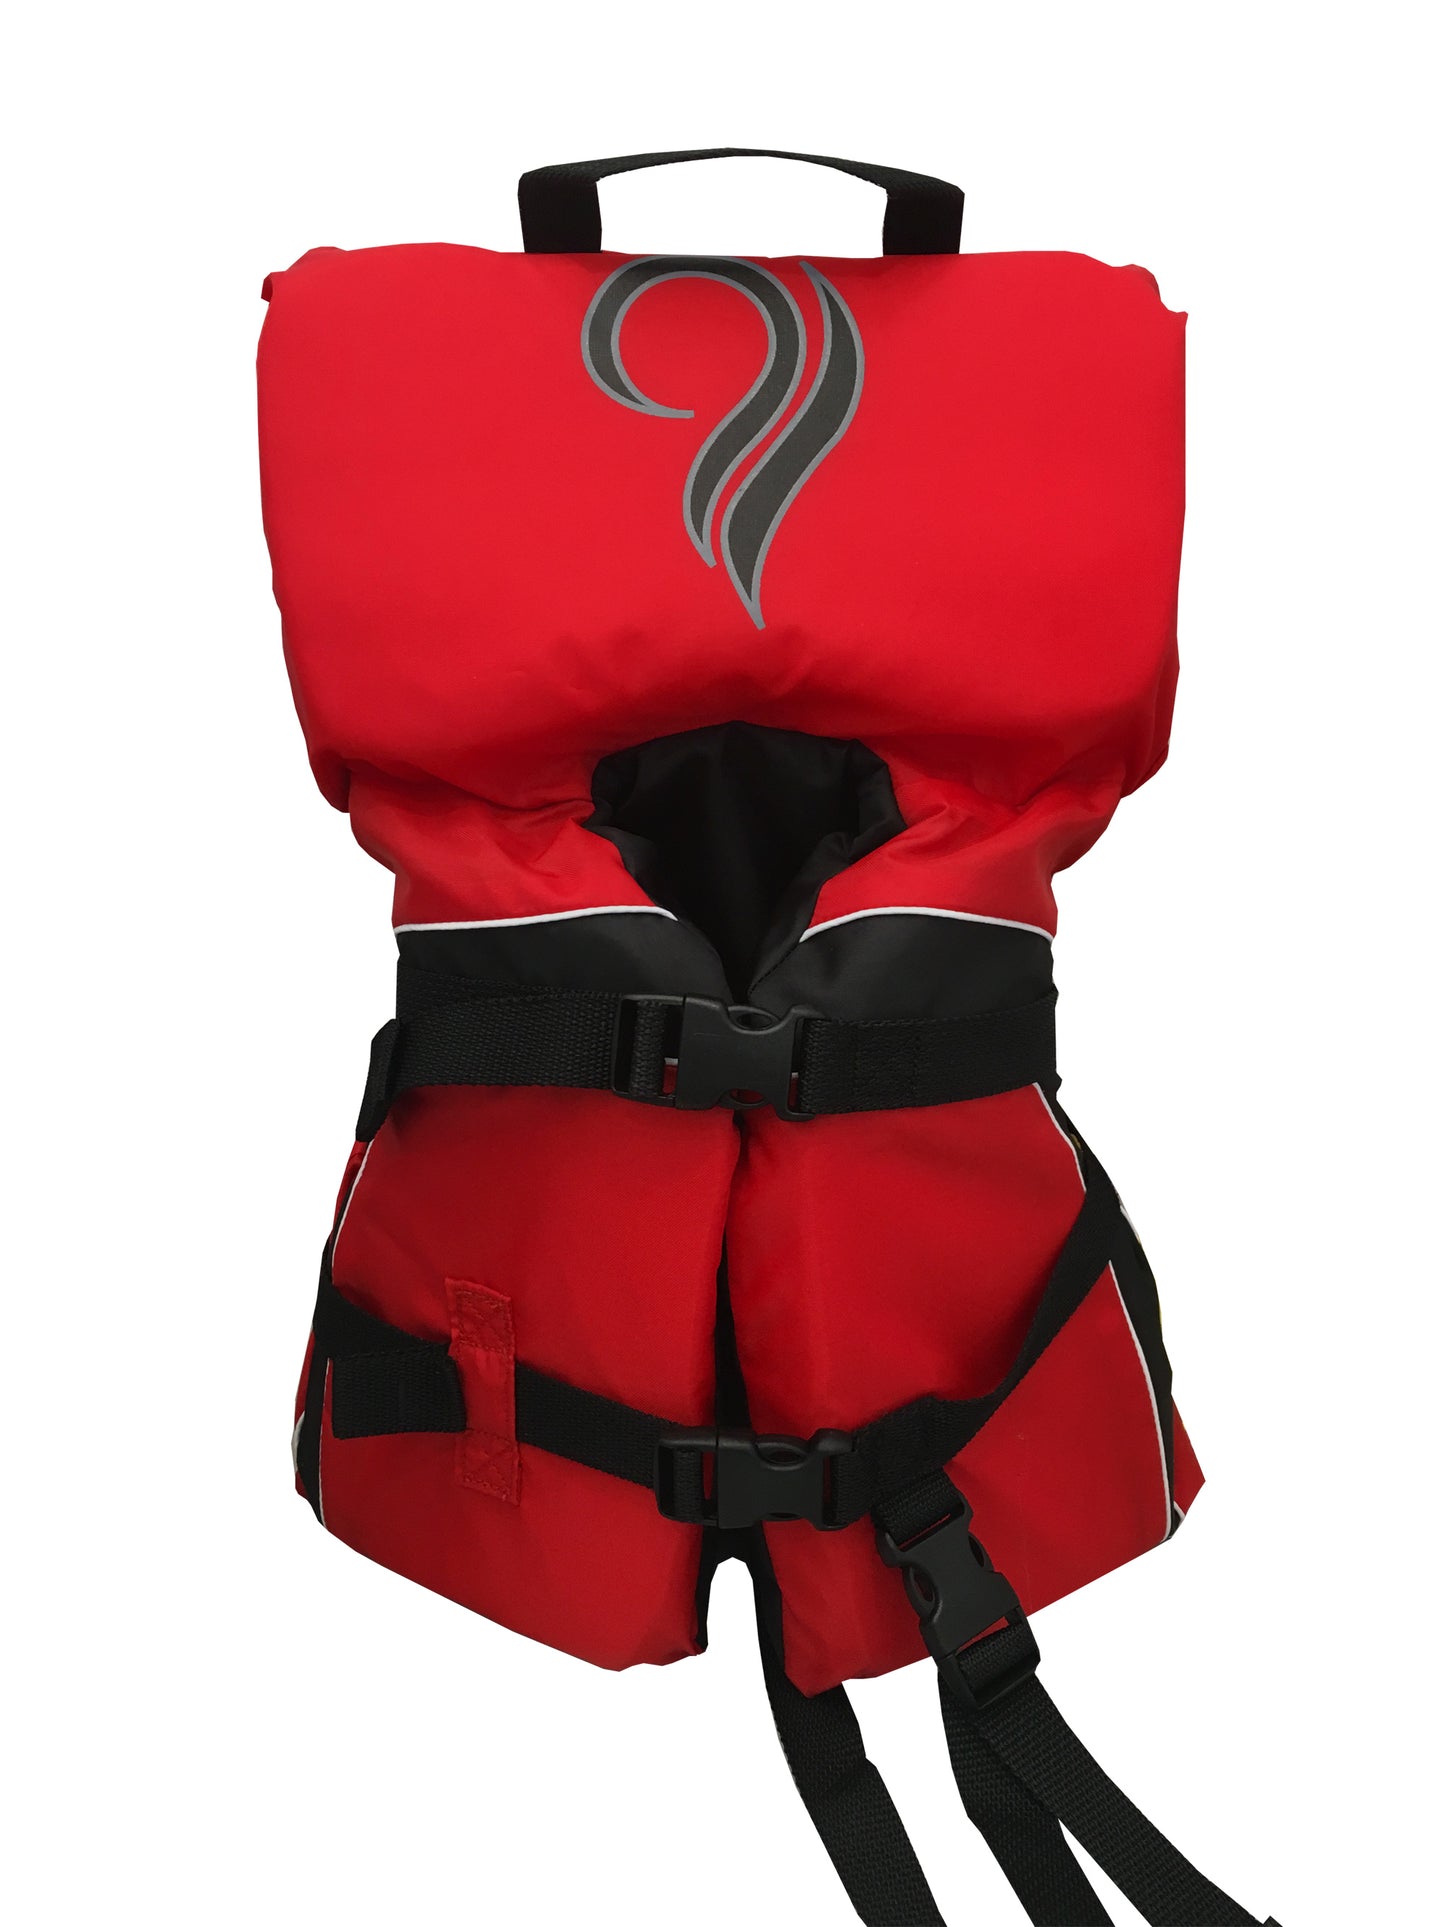 Bradley Infant Baby Life Jacket Vest | US Coast Guard Type III High Visibility